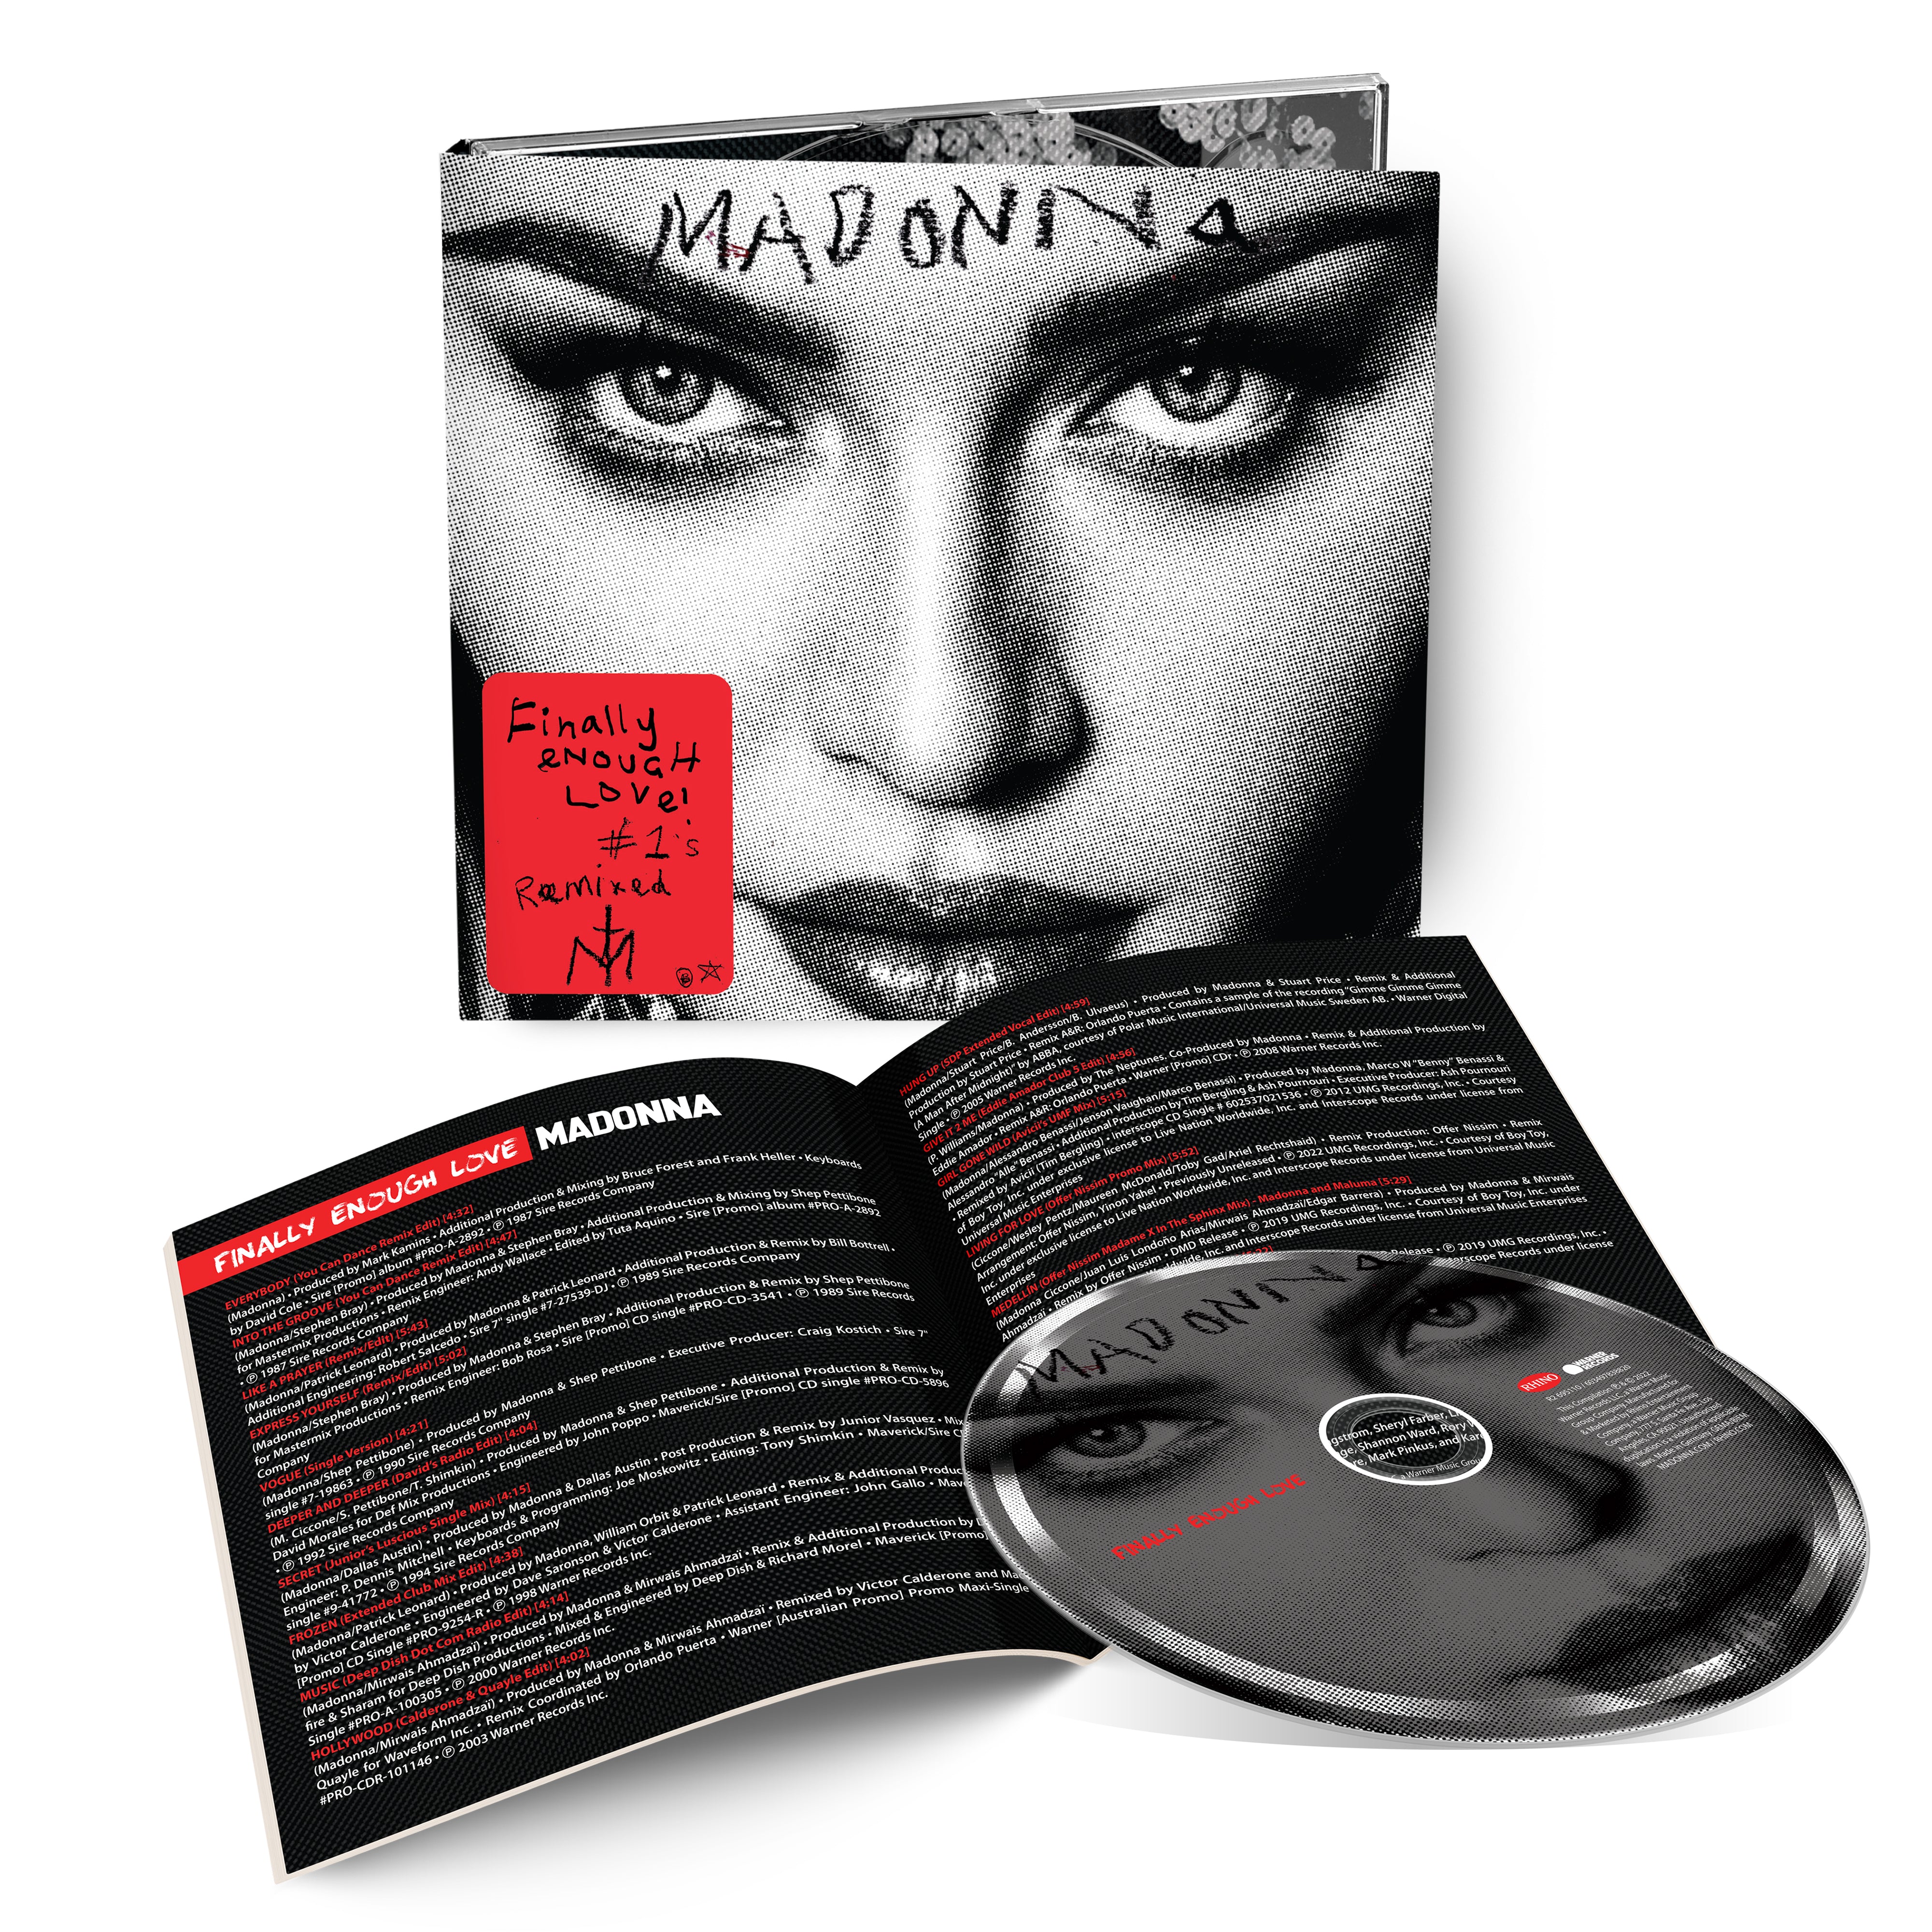 Music (album, Australian version, 2 bonus tracks) by MADONNA (CD)